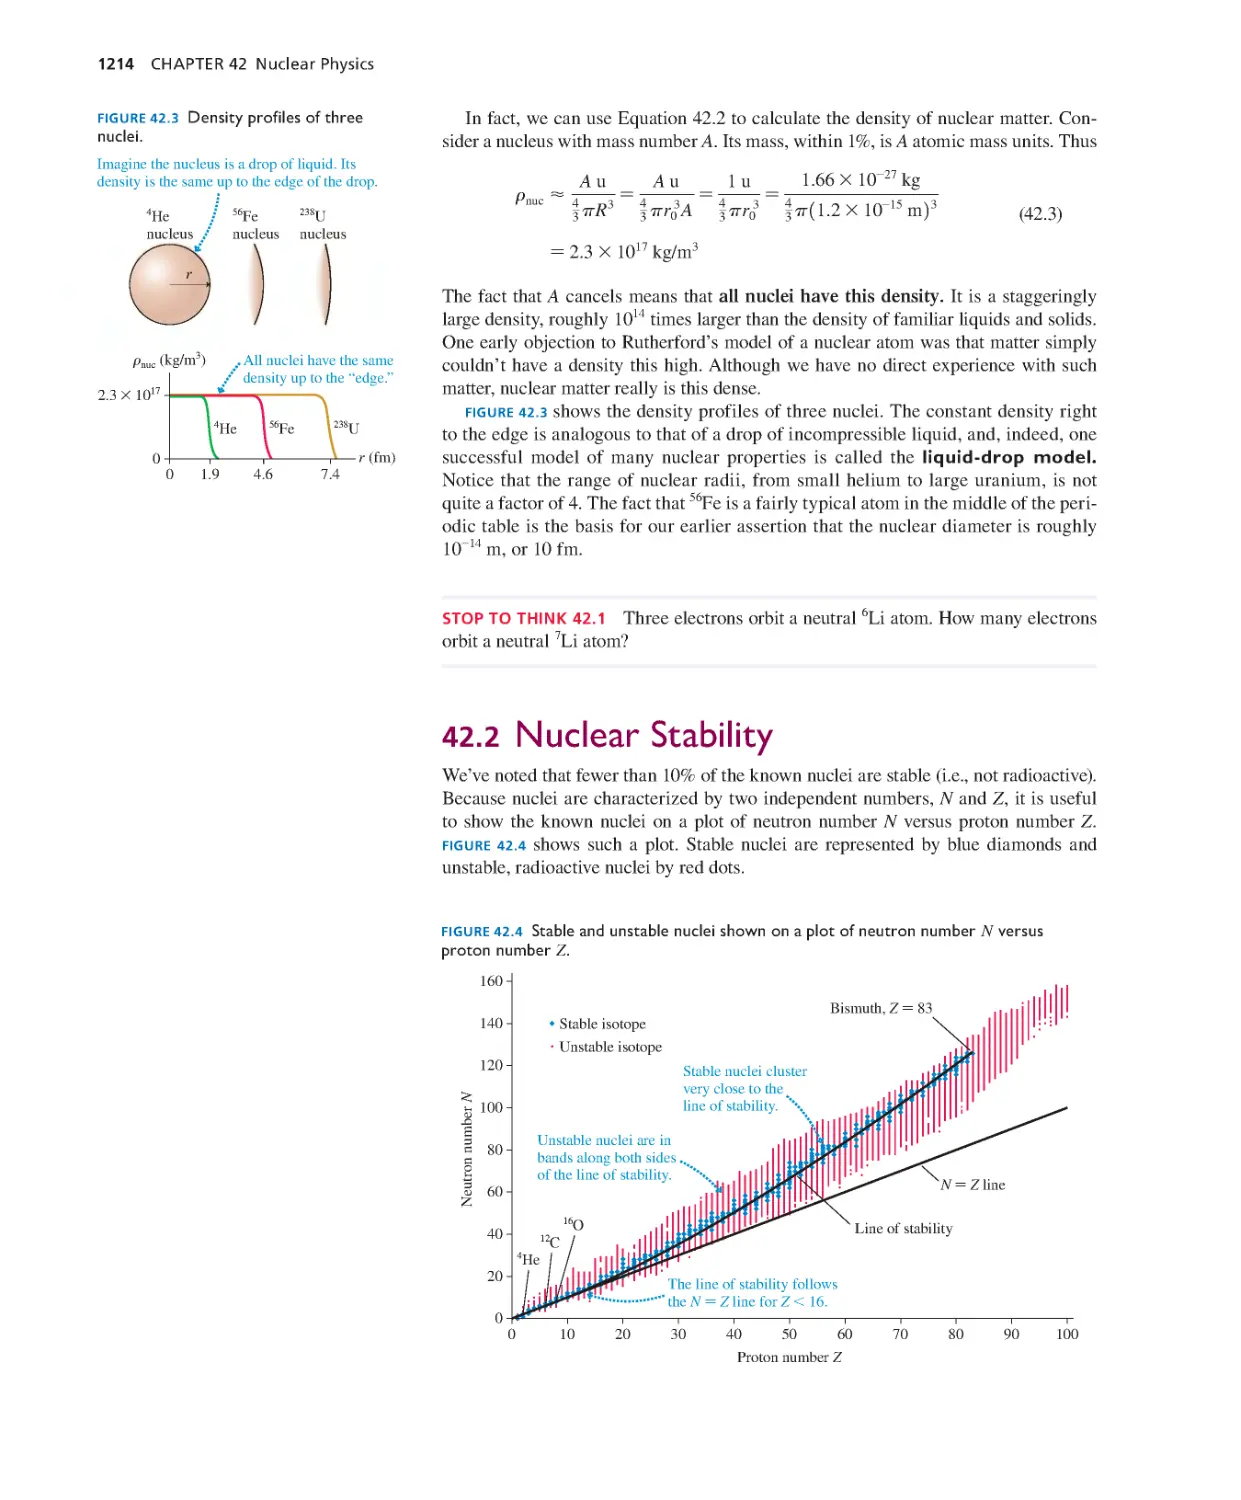 42.2. Nuclear Stability